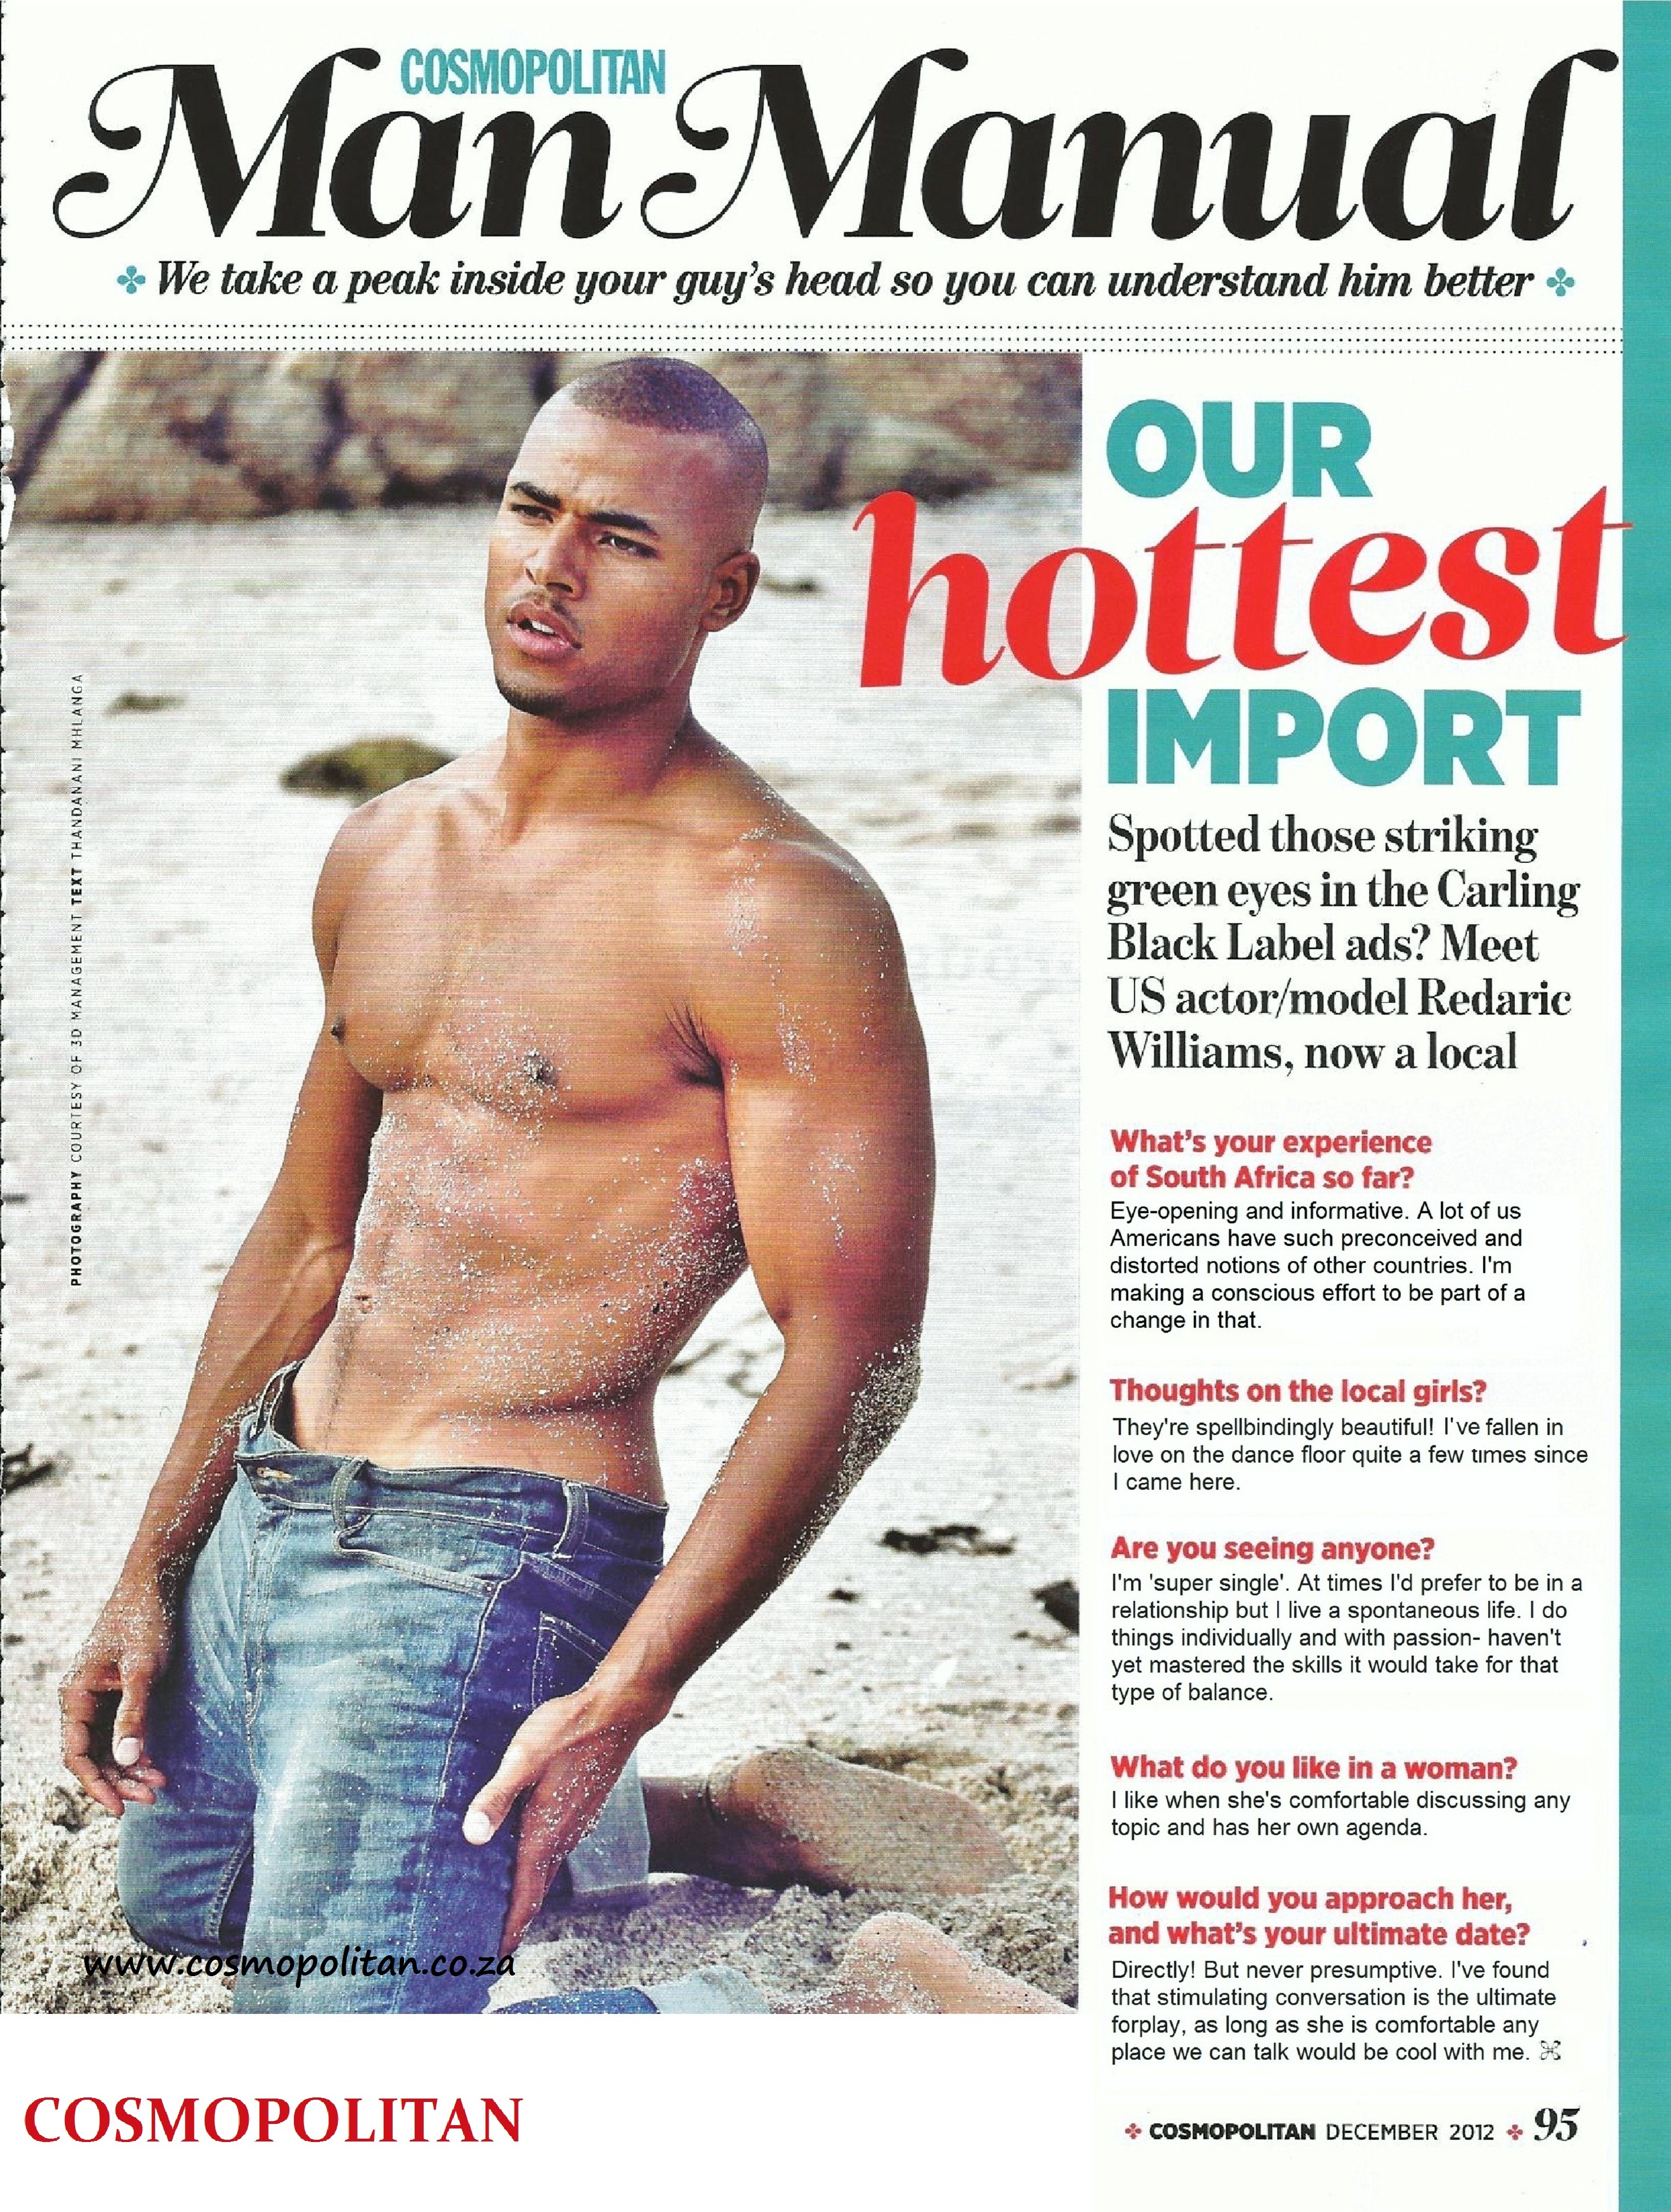 Redaric Williams Cosmopolitan Magazine SA. Interview - Man Manual cover Dec. 2012 Issue.